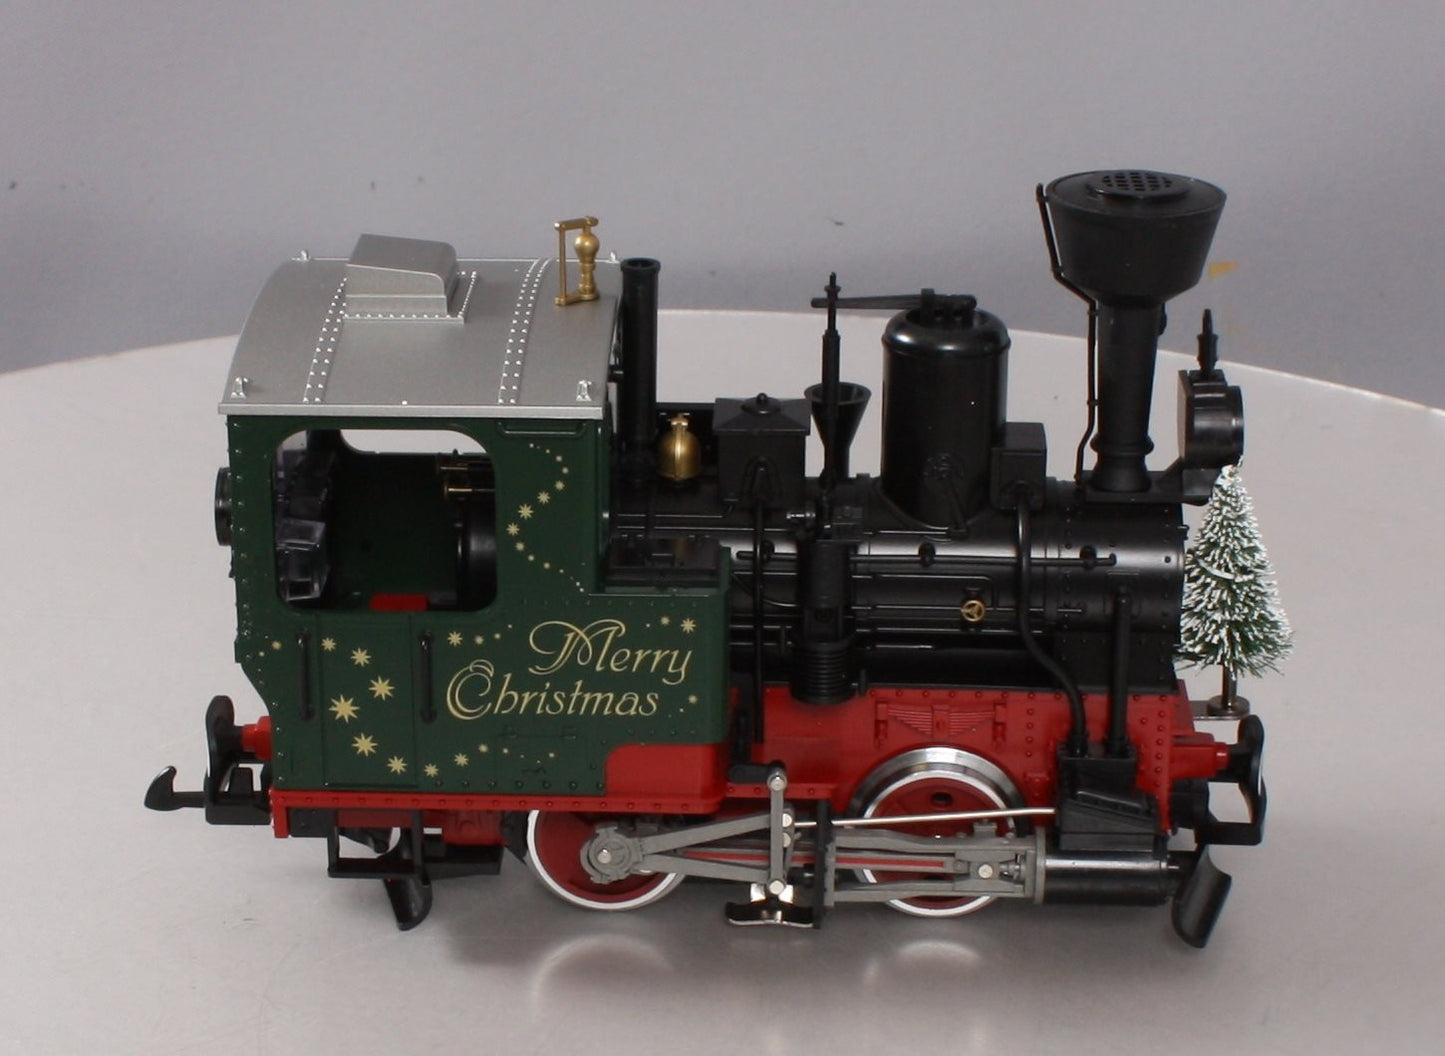 LGB 20215 G "Stainz" Christmas Locomotive